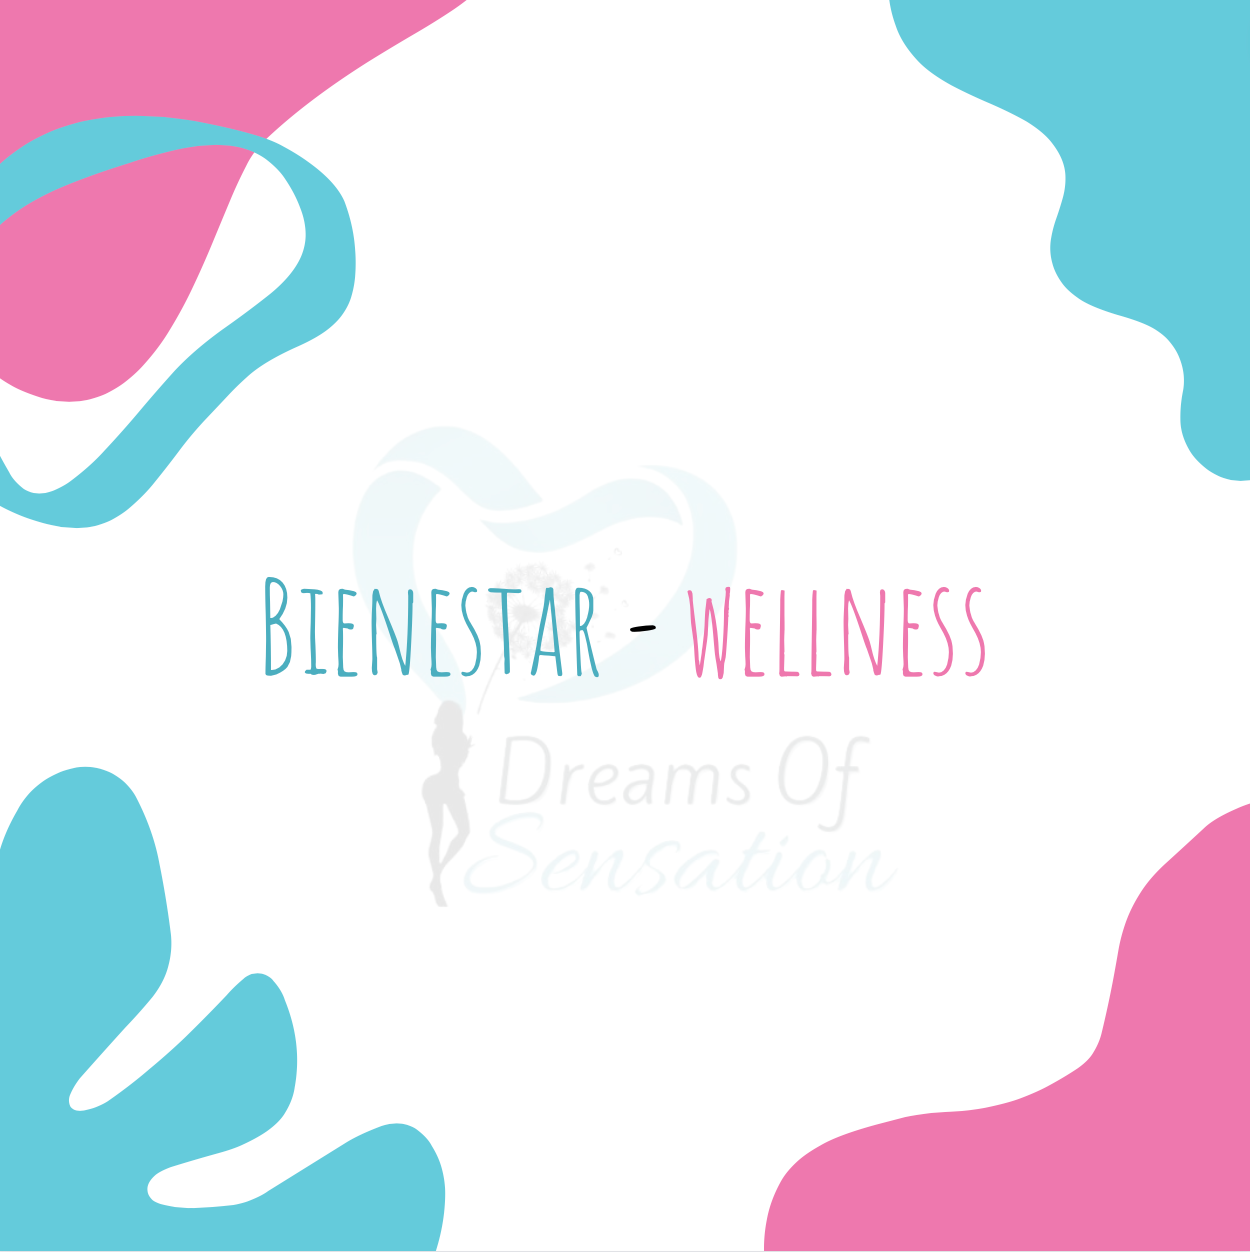 Bienestar - Wellness